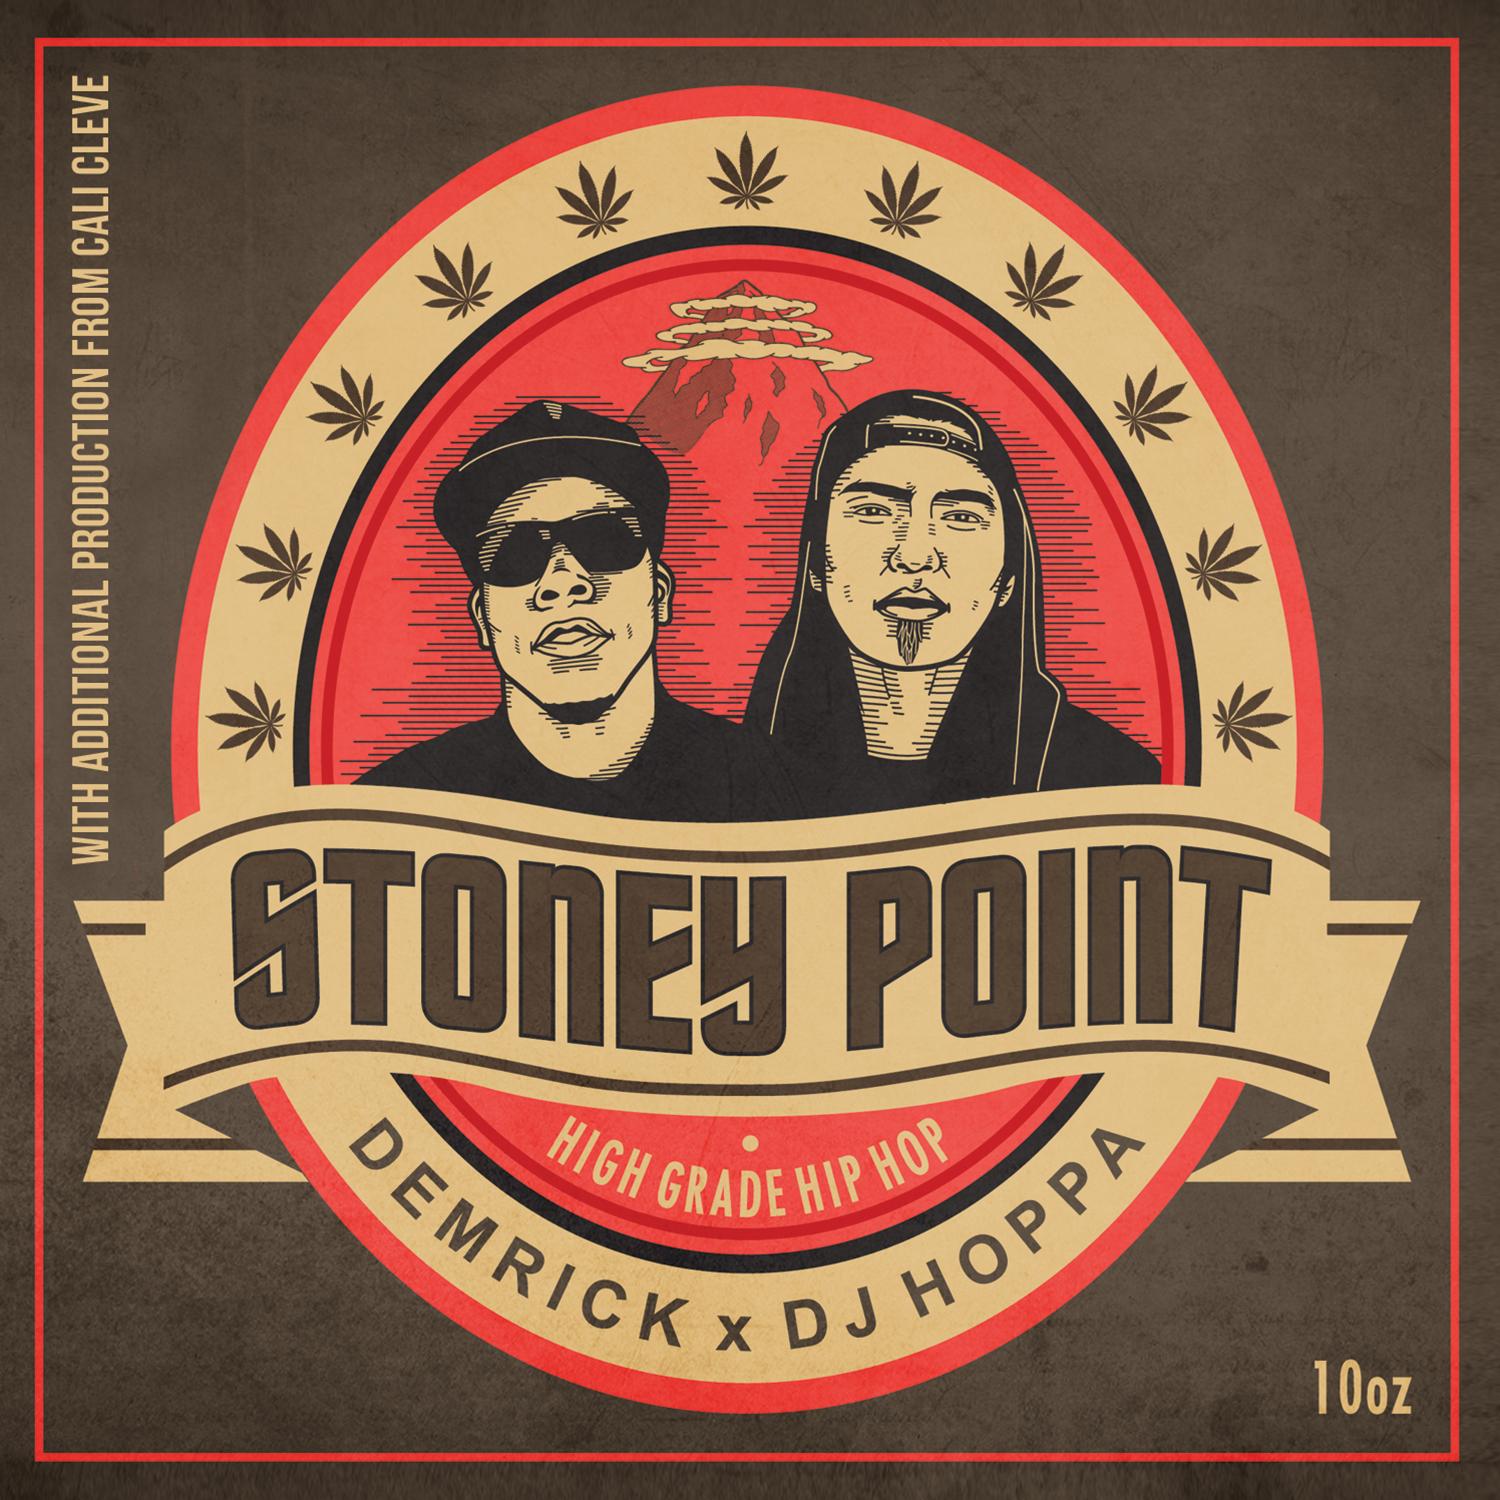 Stoney Point High